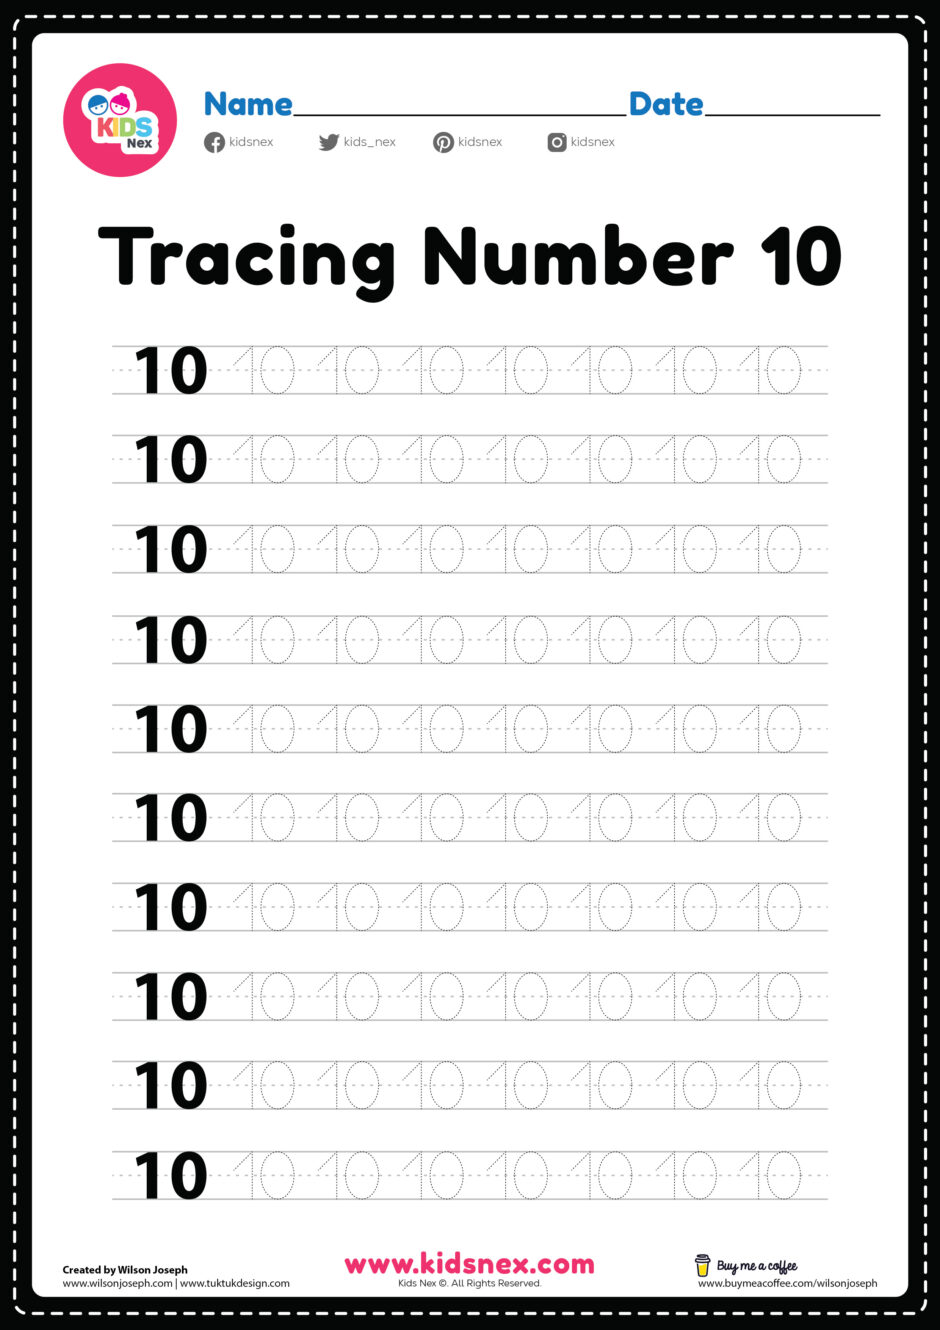 Tracing Number 10 Worksheet Free Printable PDF For Kids